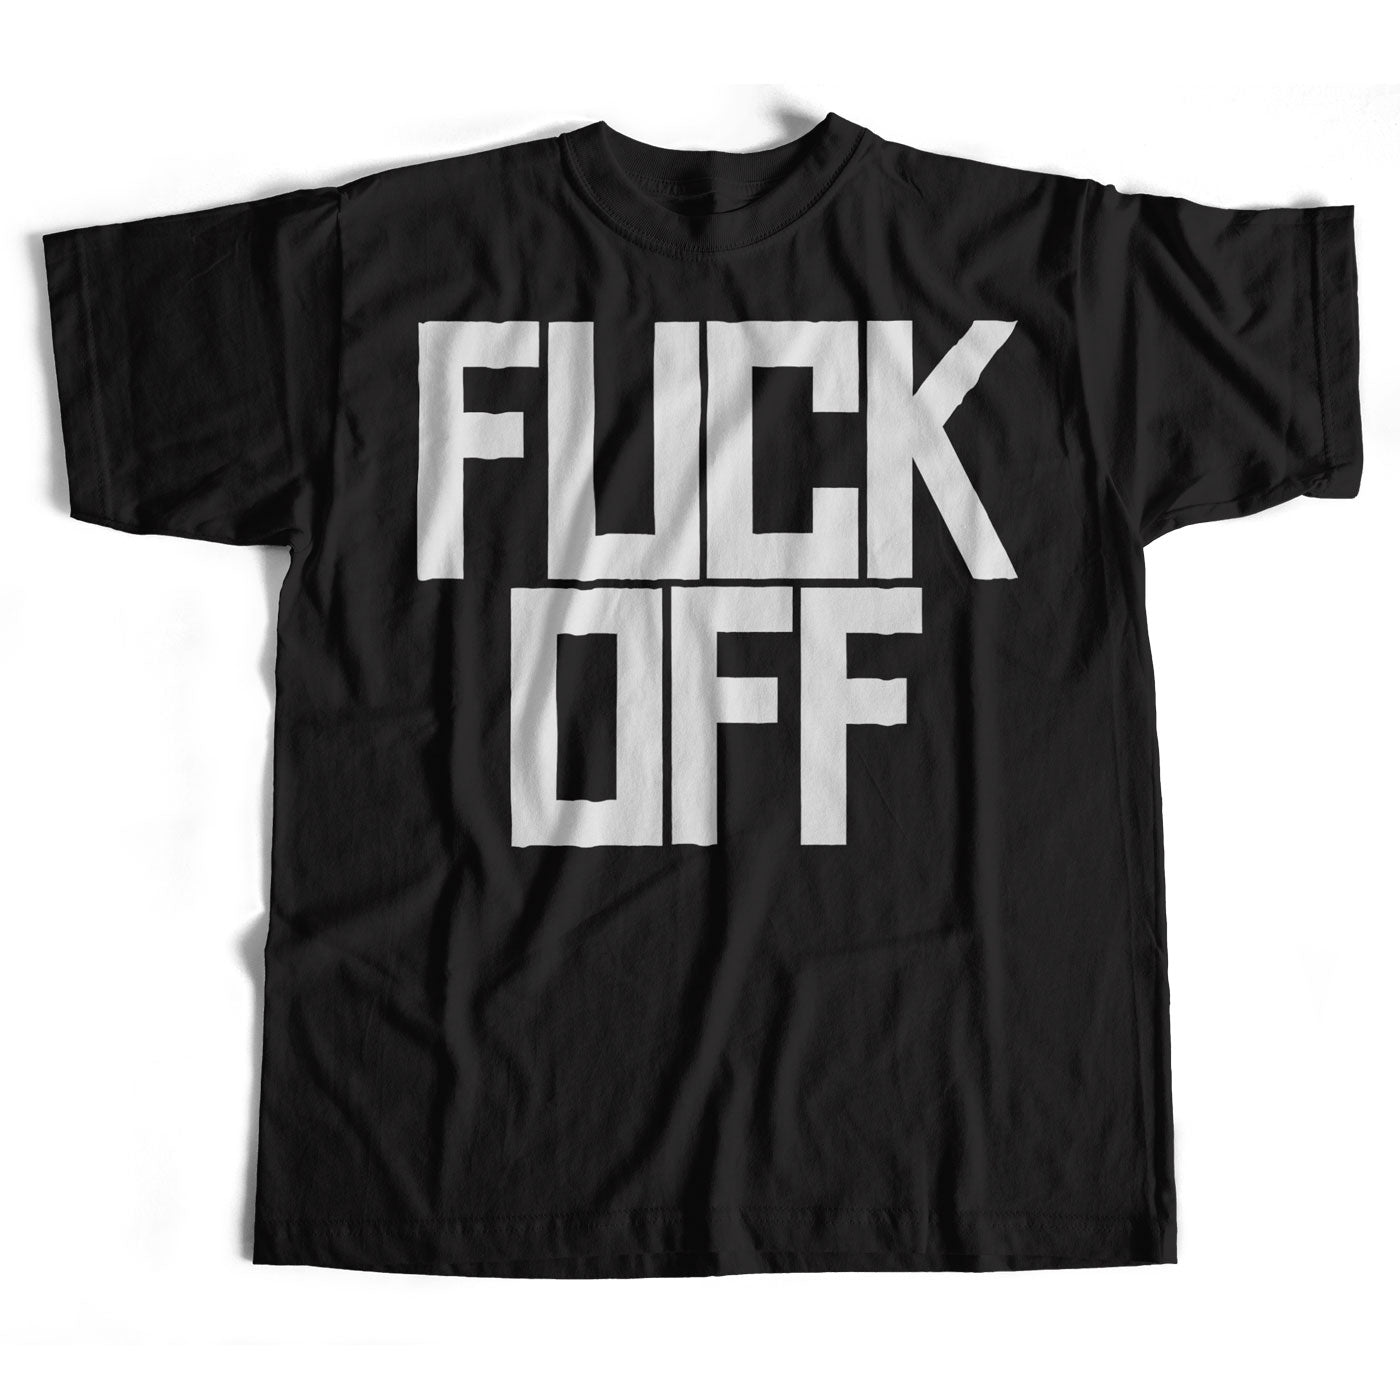 F**k Off T Shirt As Worn By James Hetfield - An Old Skool Hooligans Metal Classic